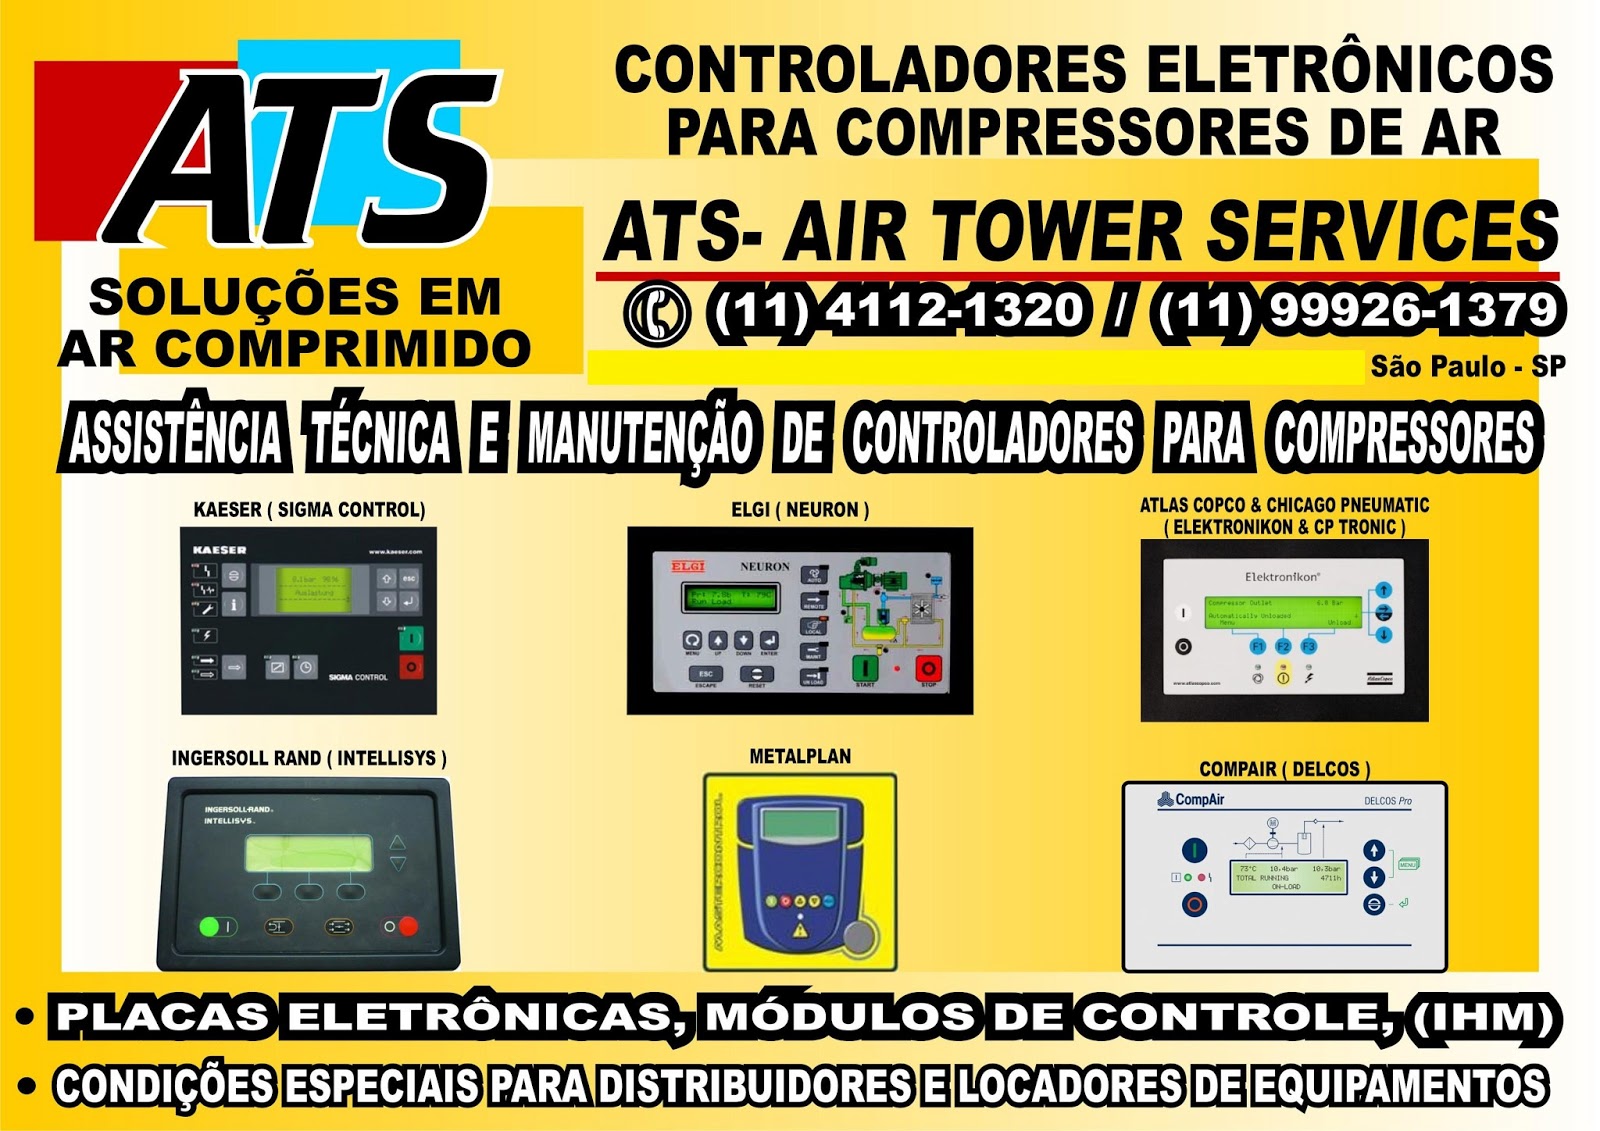 Atlas Copco Elektronikon Mk Iv Manual download free - planepiratebay